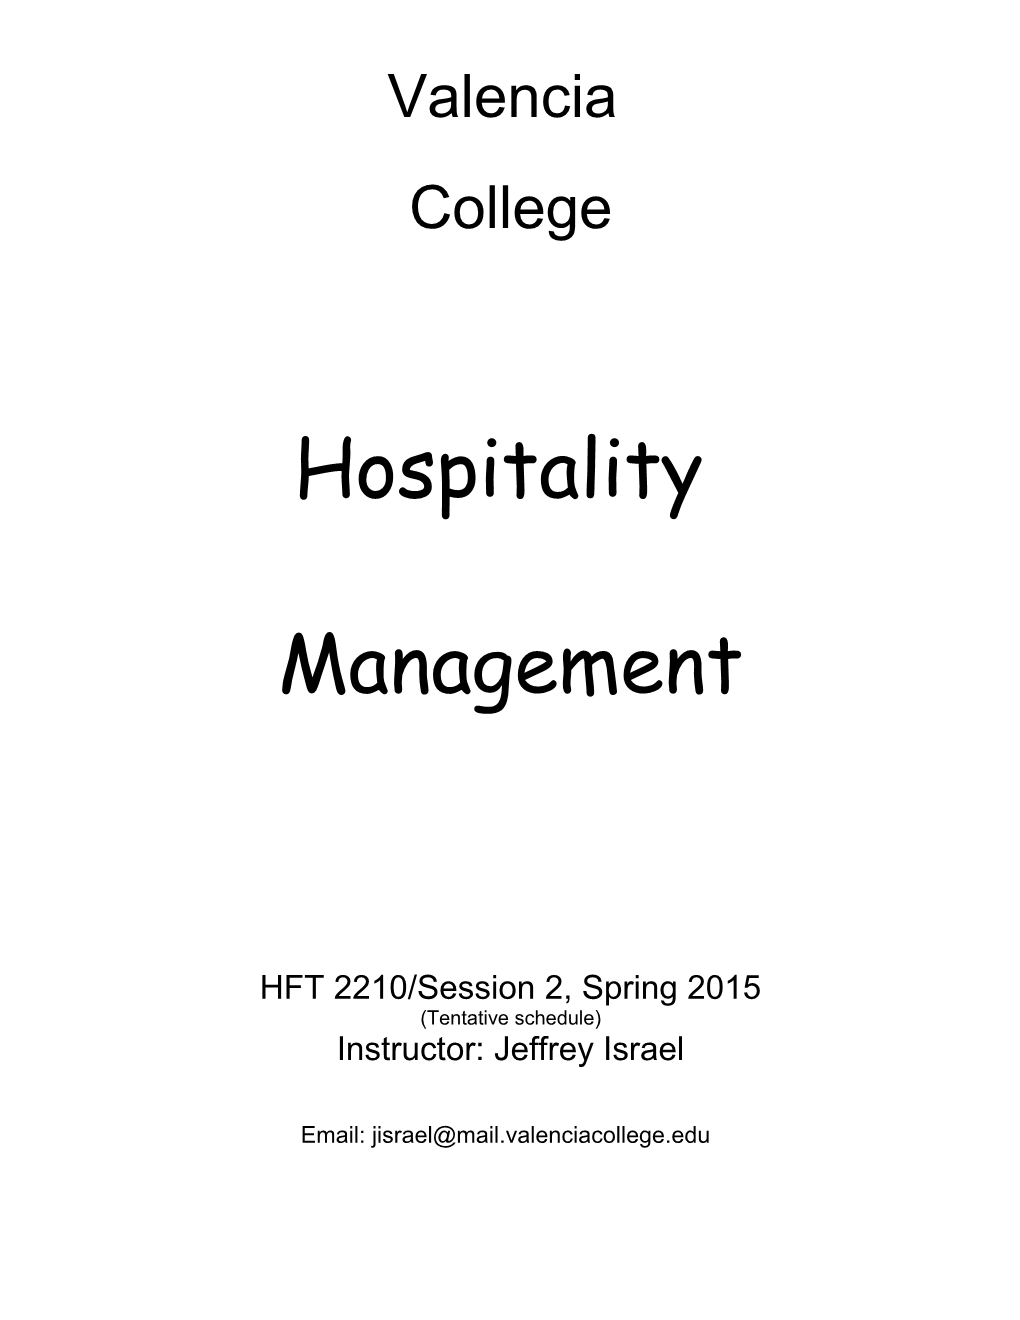 HFT 2210/Session 2, Spring 2015